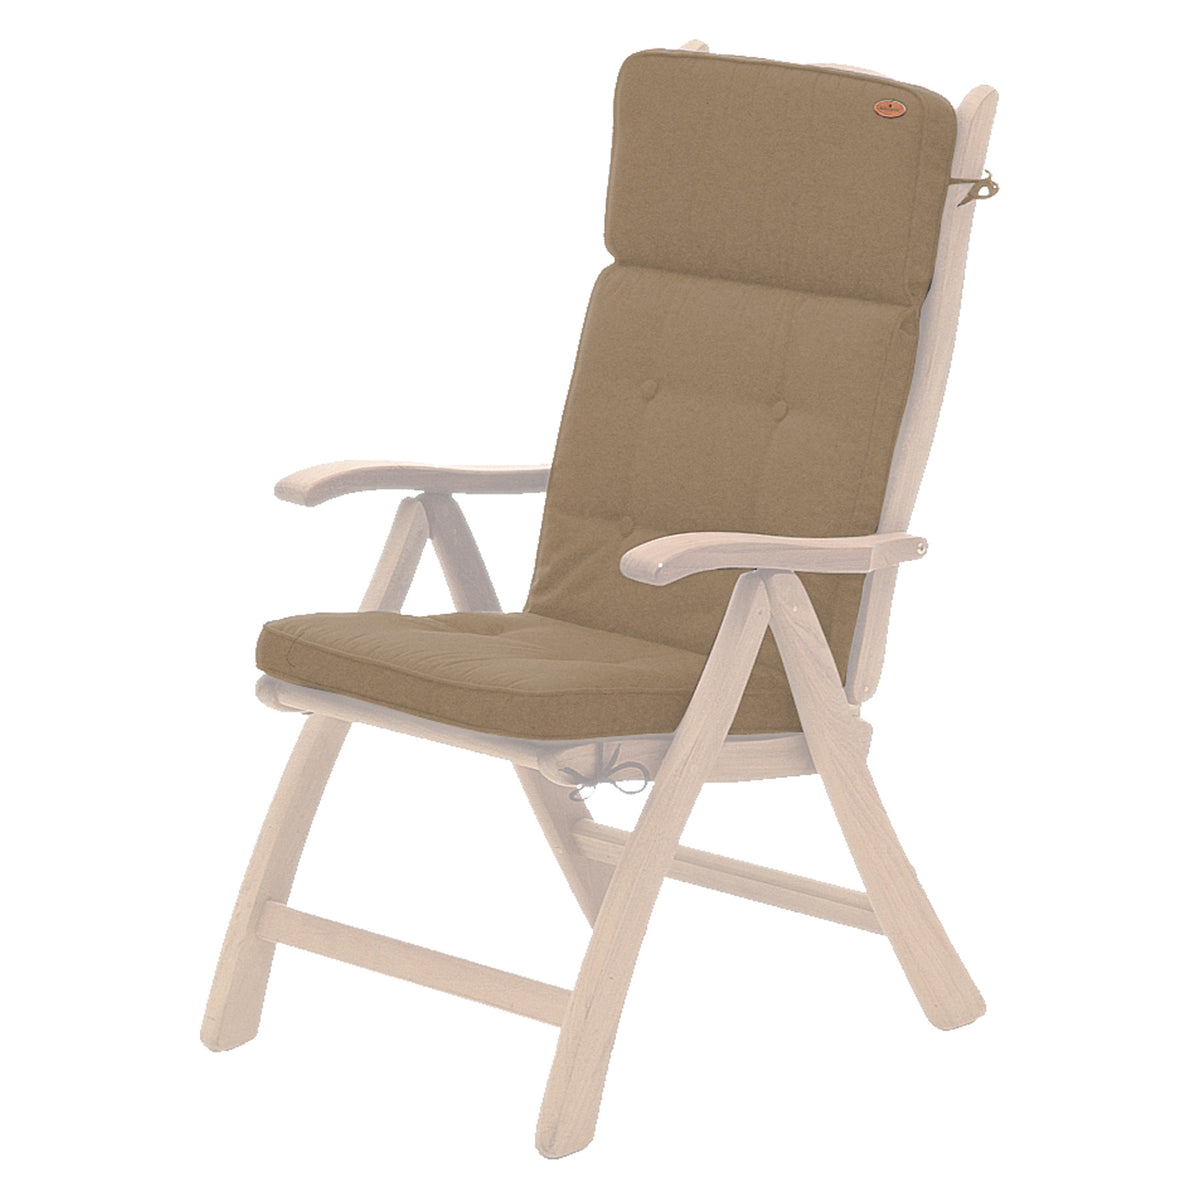 Alexander Rose Olefin Recliner Chair Cushion - Oatmeal